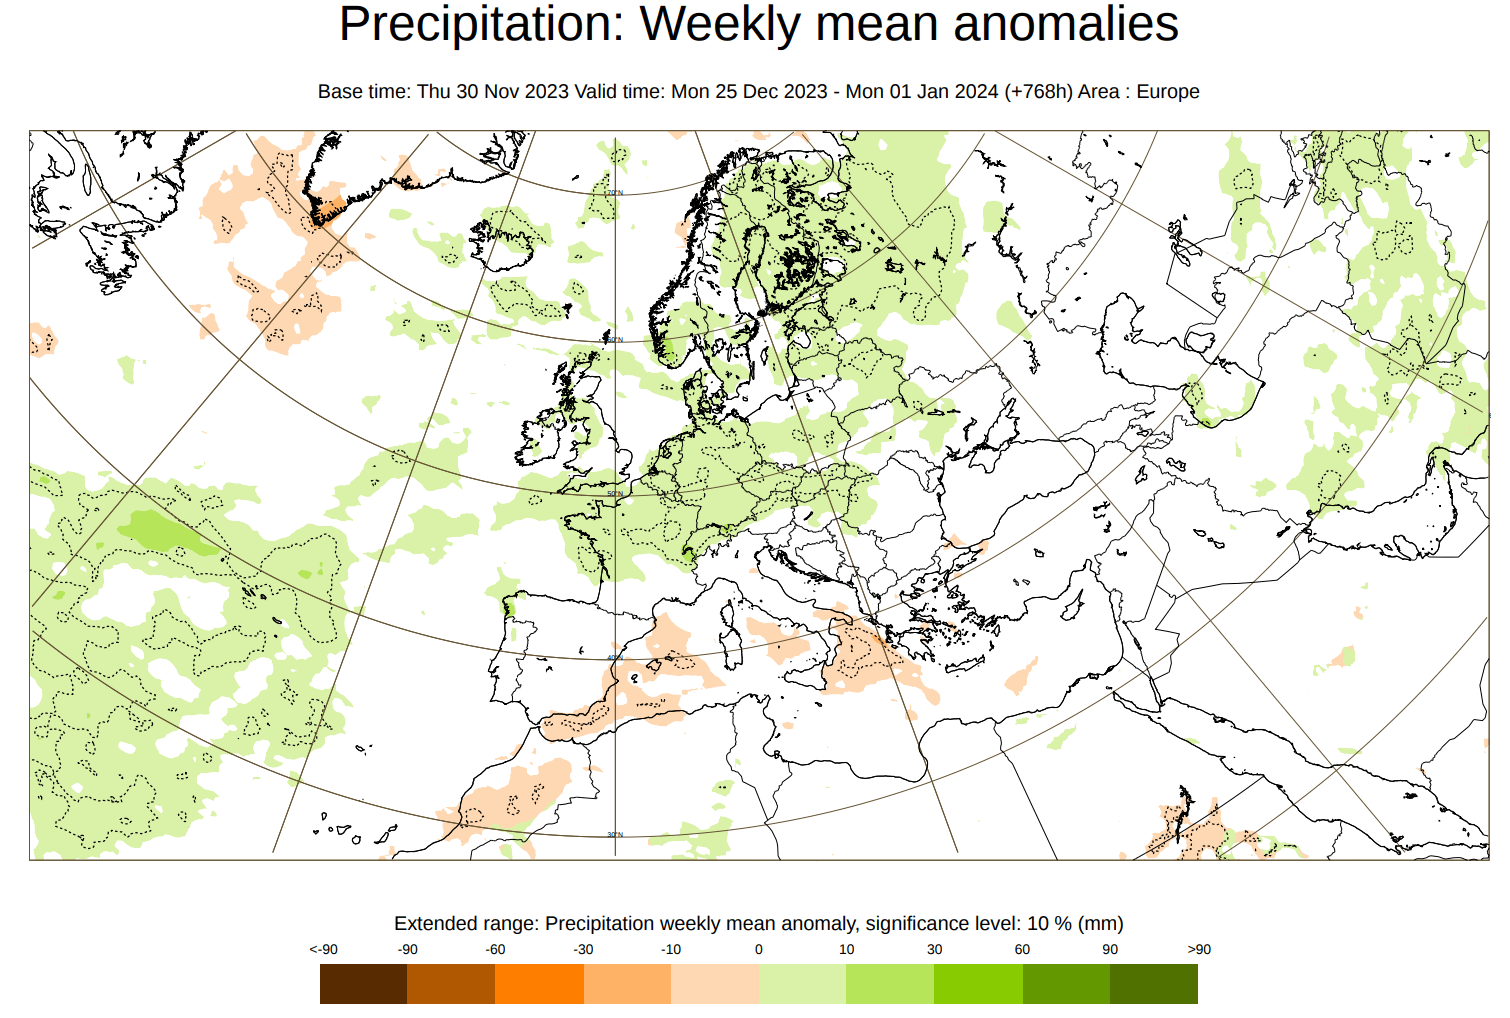 weather-forecast-christmas-snow-potential-precipitation-anomaly-europe-ecmwf